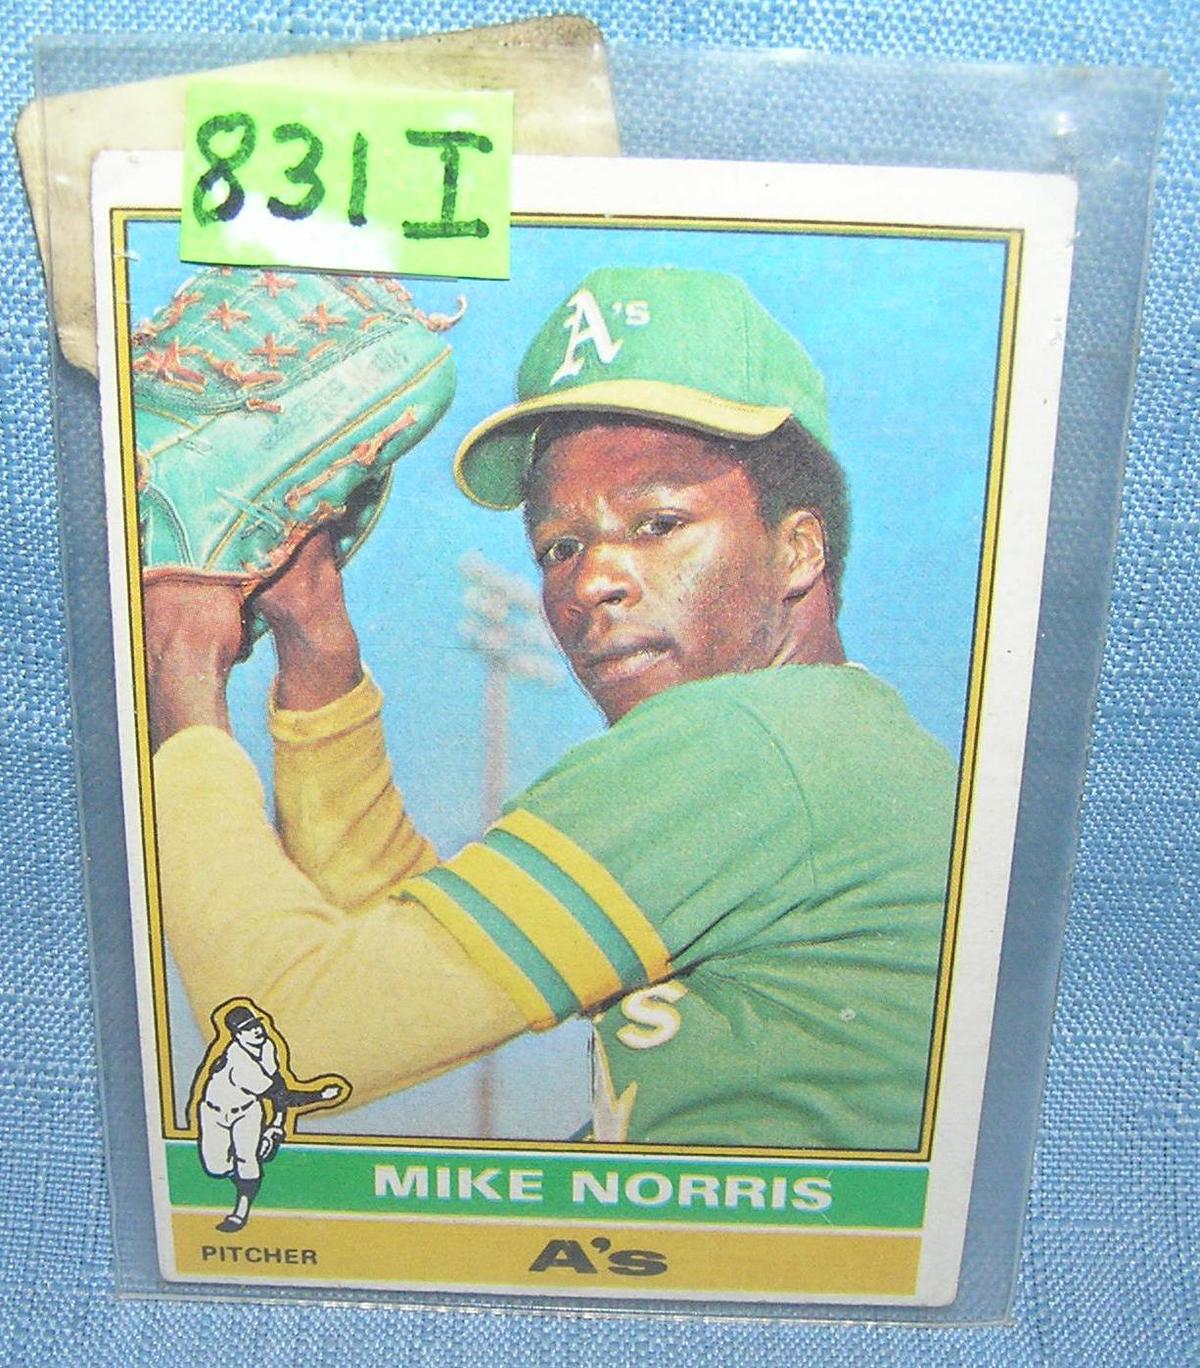 Mike Norris rookie baseball card